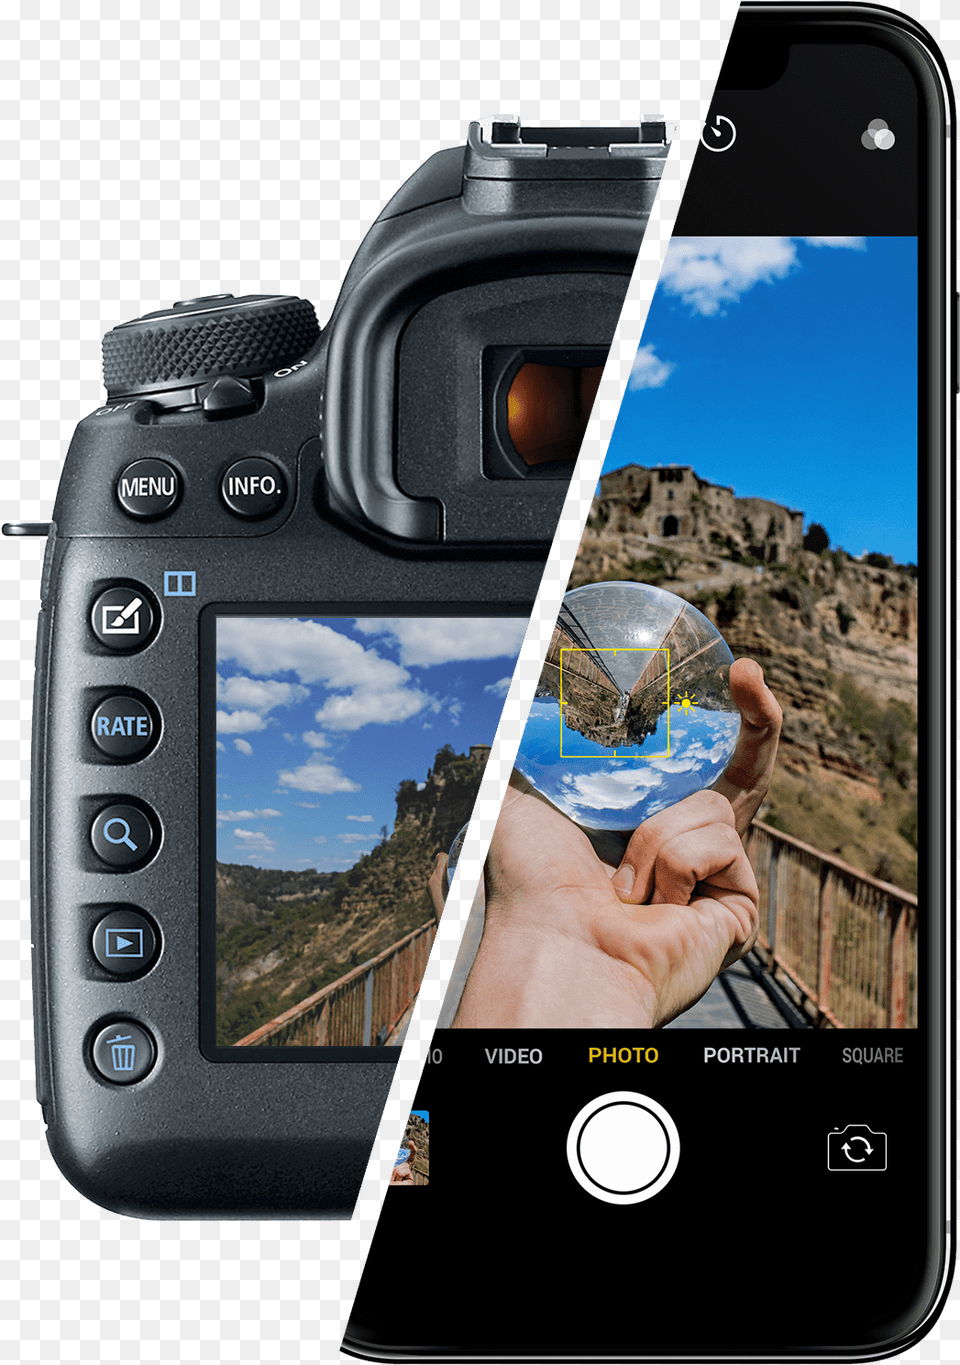 Canon Eos 5d Mark Iv Dslr Camera Download Camaras Fotograficas Parte Trasera, Electronics, Phone, Digital Camera, Mobile Phone Png Image